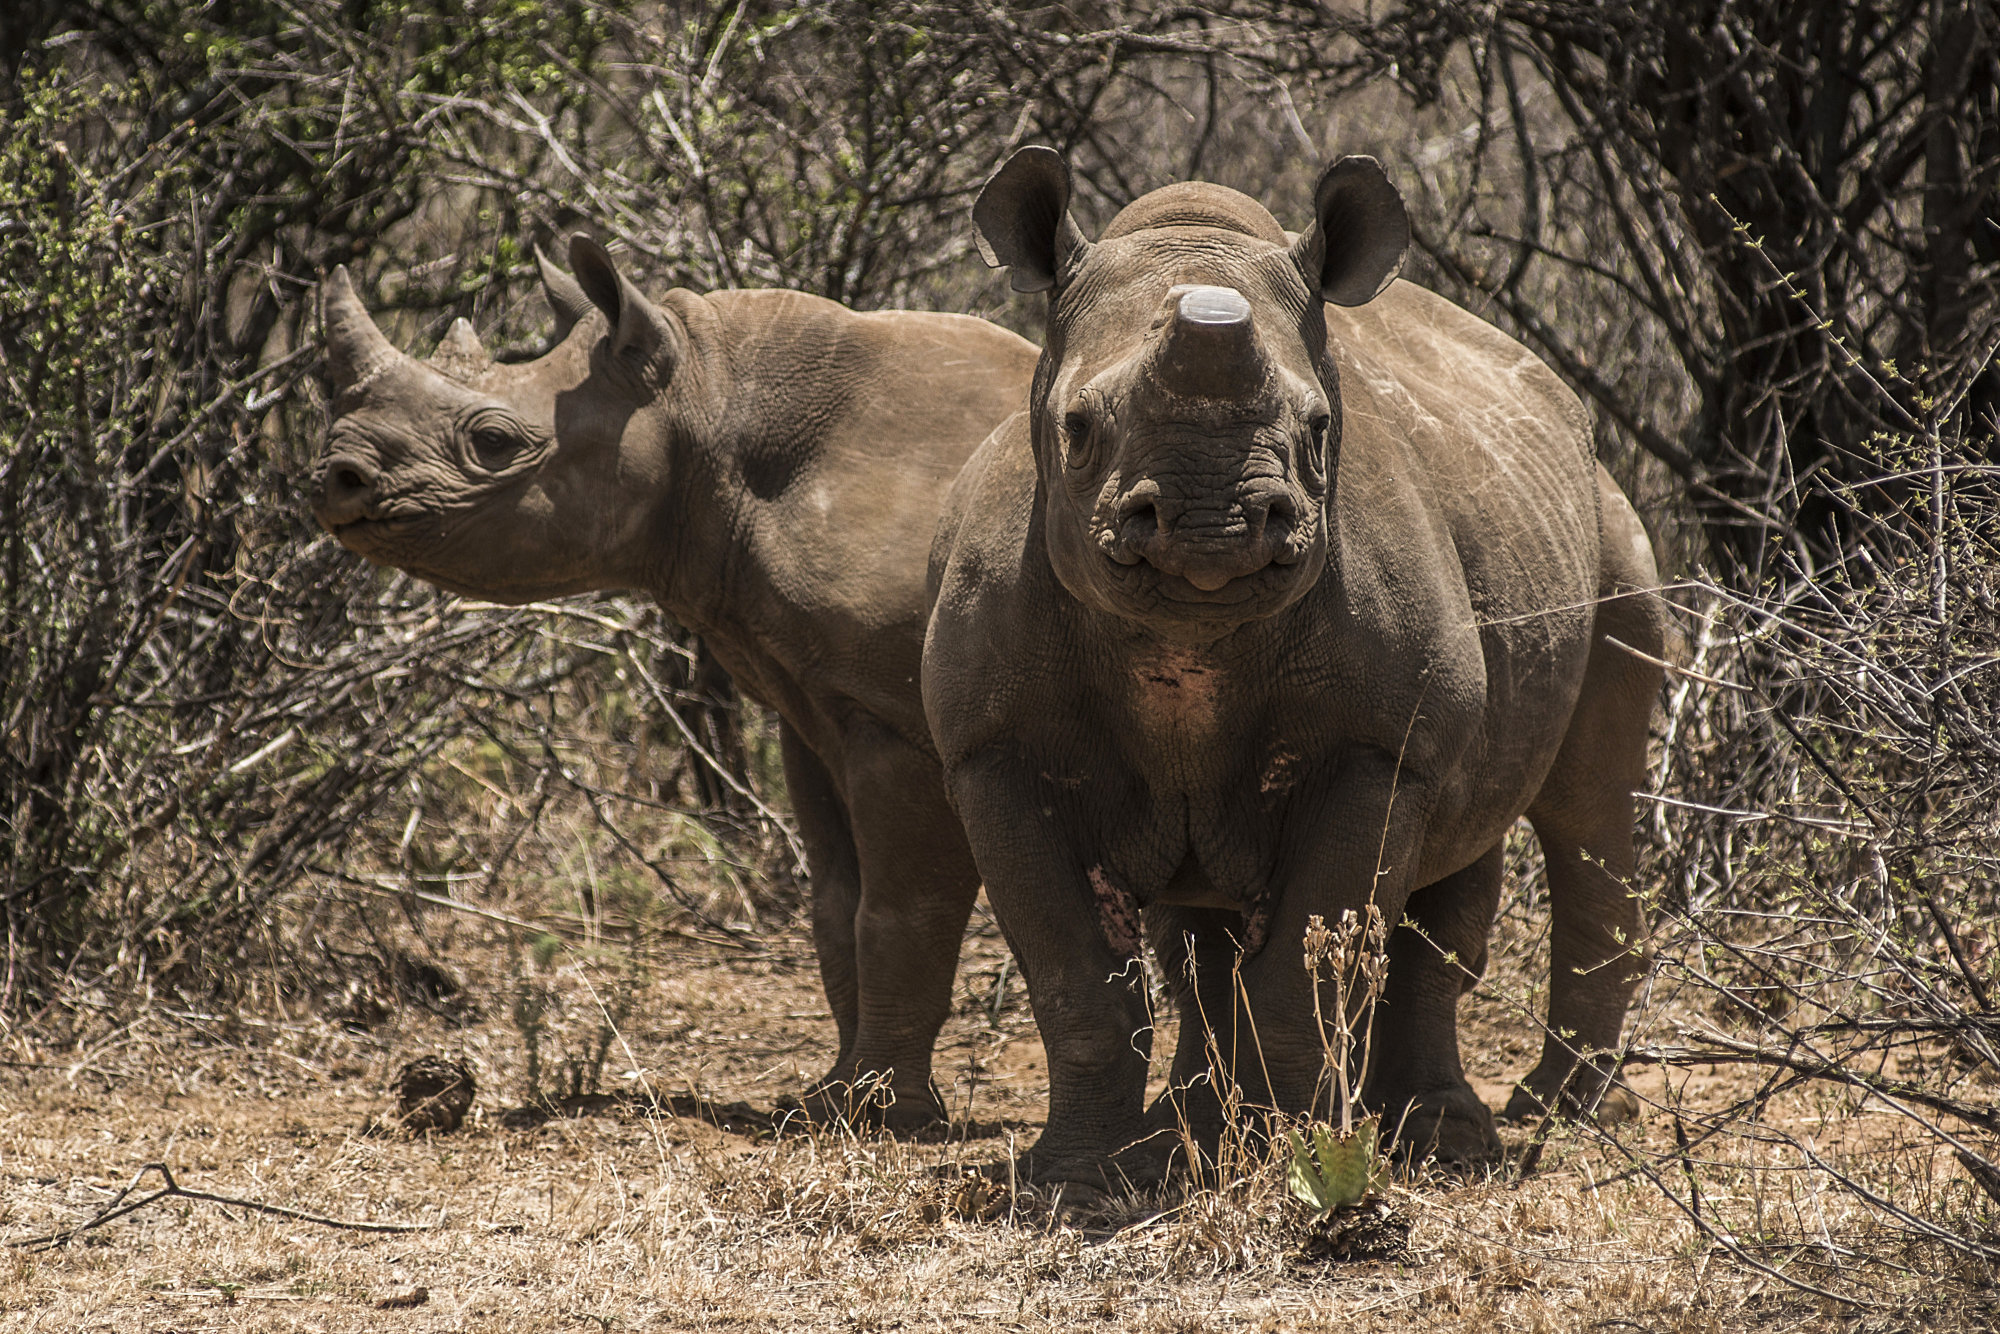 Private Rhino Farm In South Africa